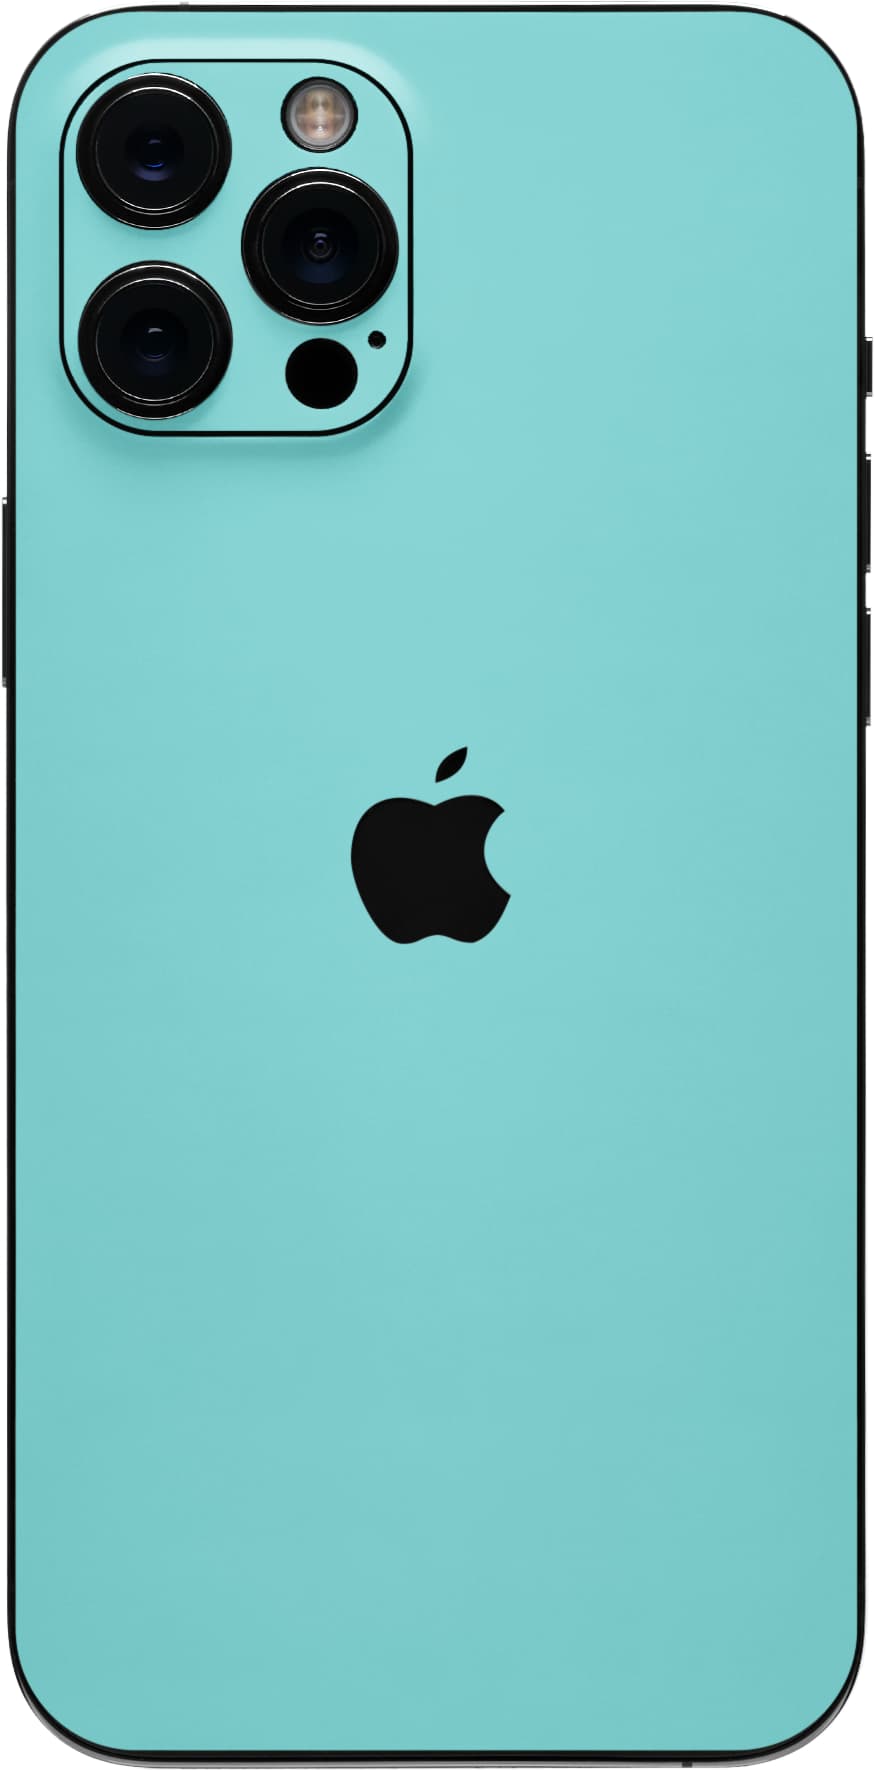 Apple iPhone 12 Pro Max Skin - Harmony and Love by Heidi Dobrott